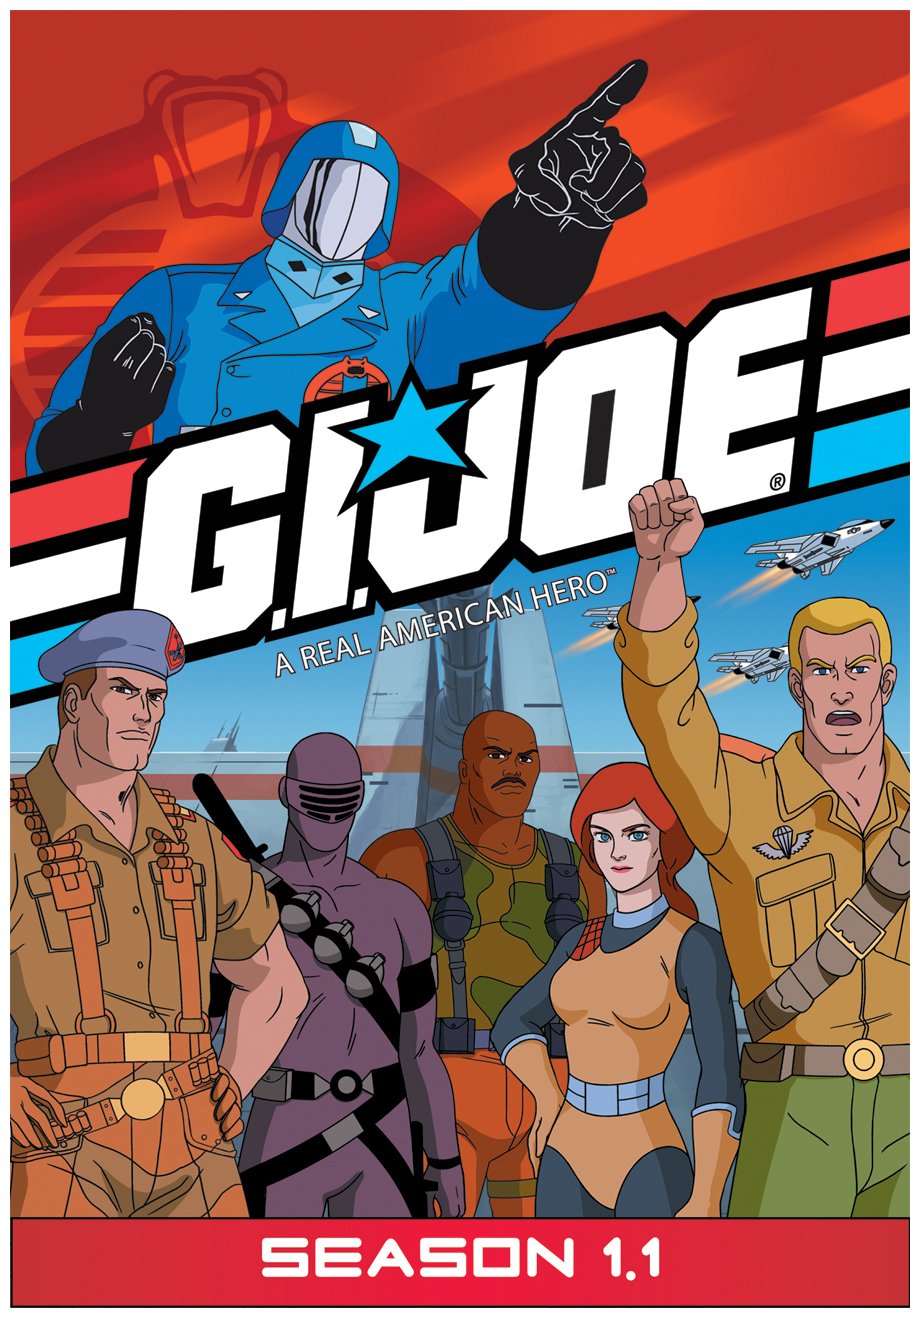 Ace (G.I. Joe) - Wikipedia